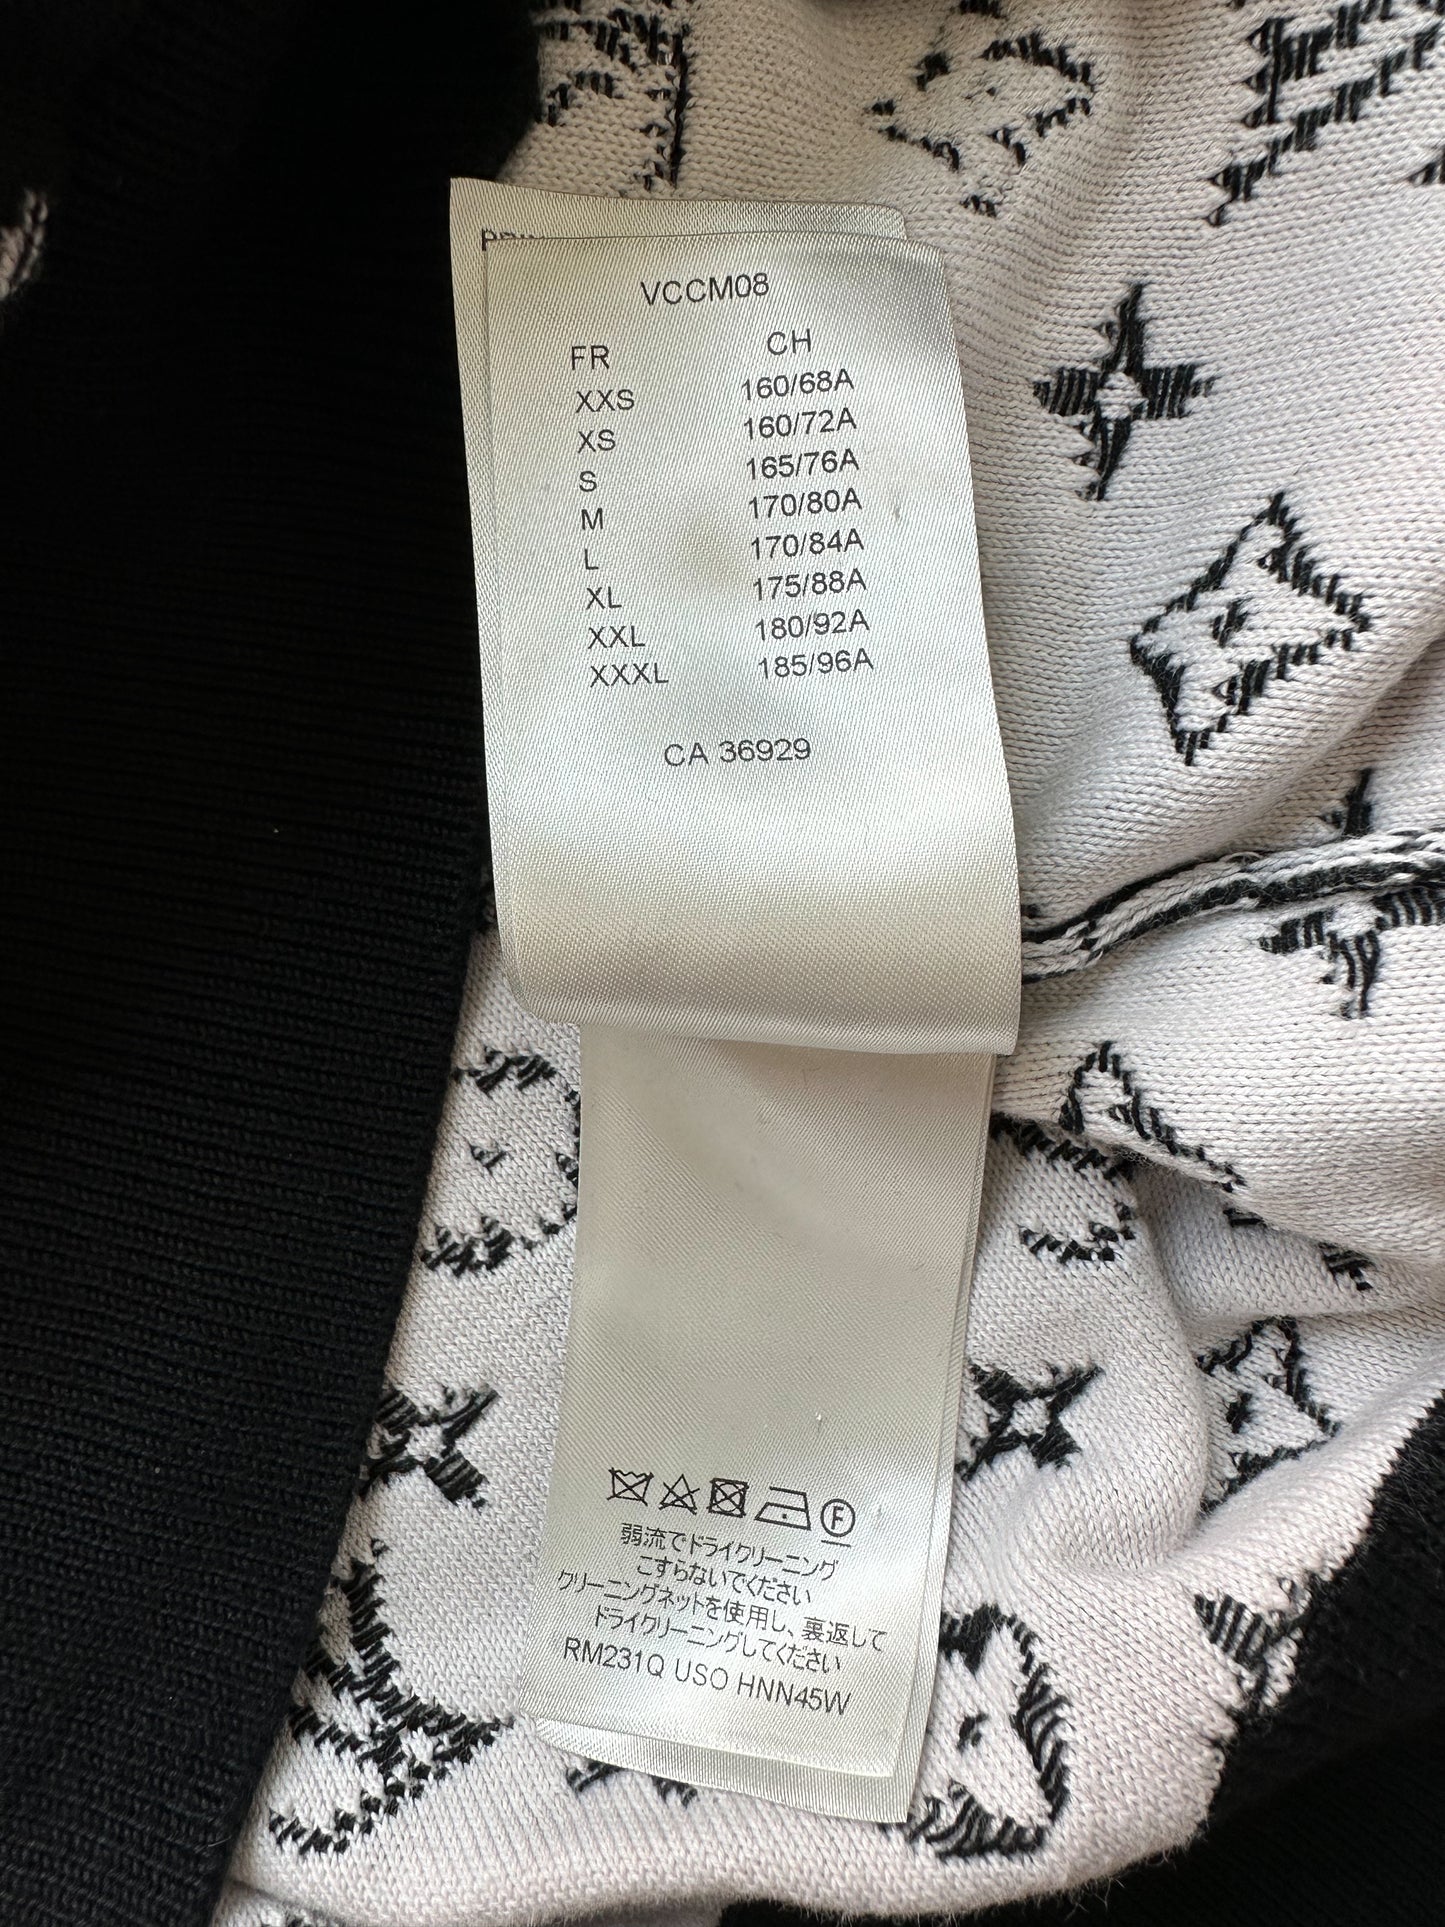 Louis Vuitton - Monogram Gradient Hoodie - Black Blanc - Men - Size: M - Luxury